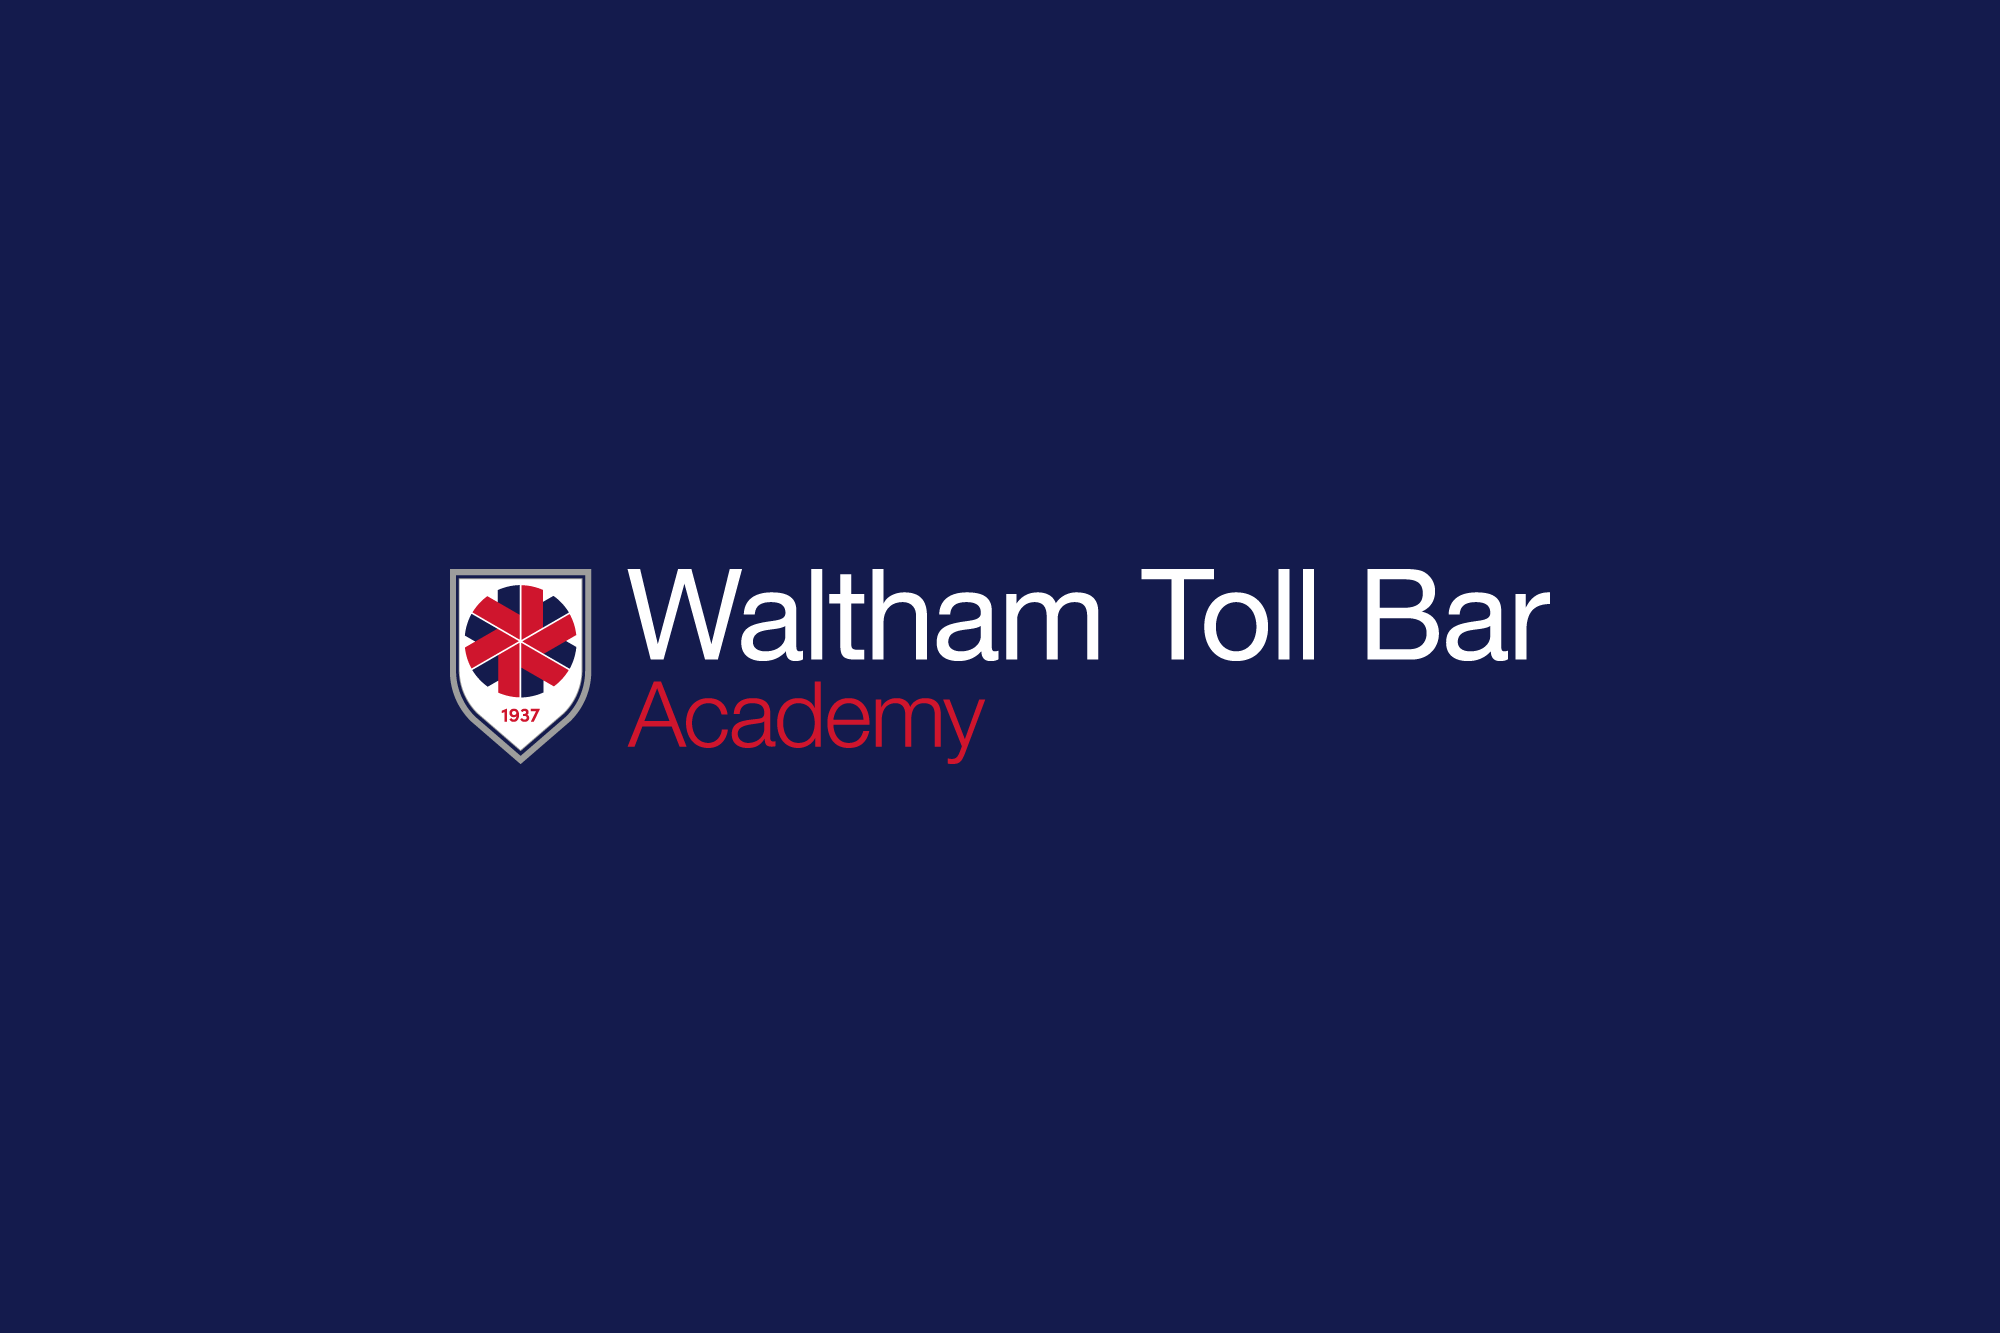 waltham-toll-bar-academy.png